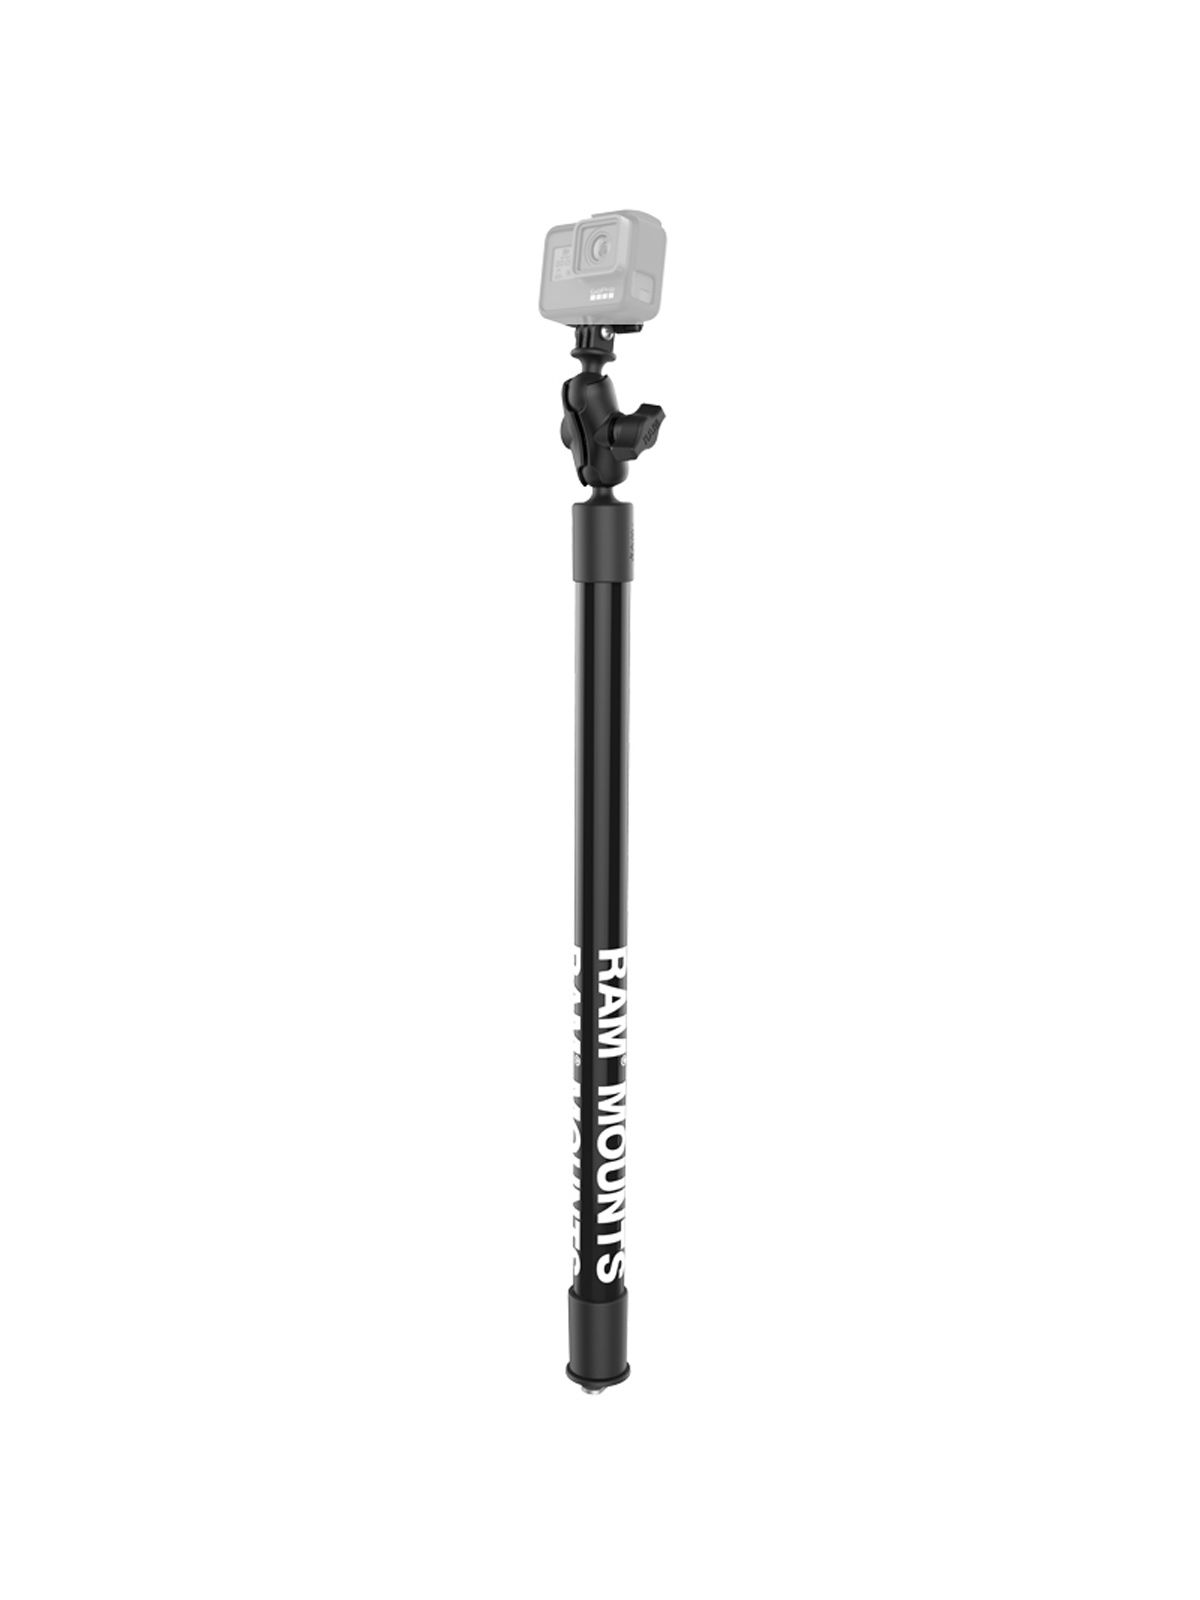 RAM Mounts Verbundstoff Kameraarm für GoPro Action Kameras - mit Arm (18 Zoll), GoPro-Adapter, B-Kugel (1 Zoll)